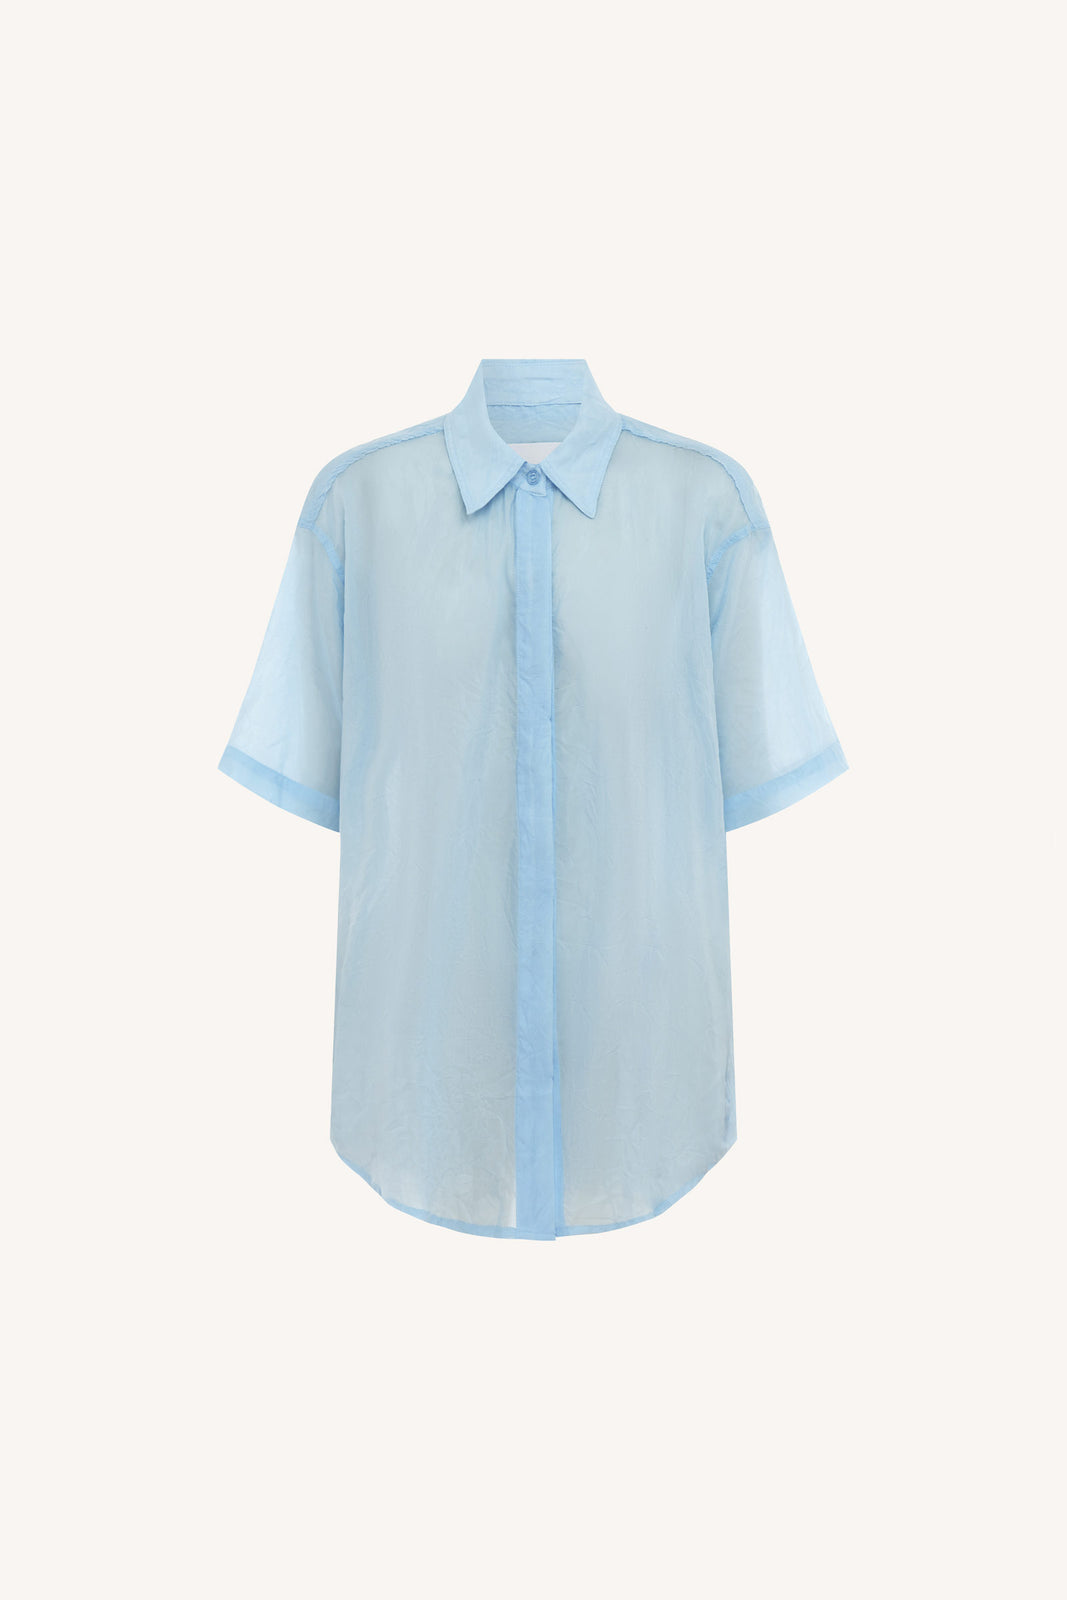 rowie the label - faye silk oversized shirt - baby blue